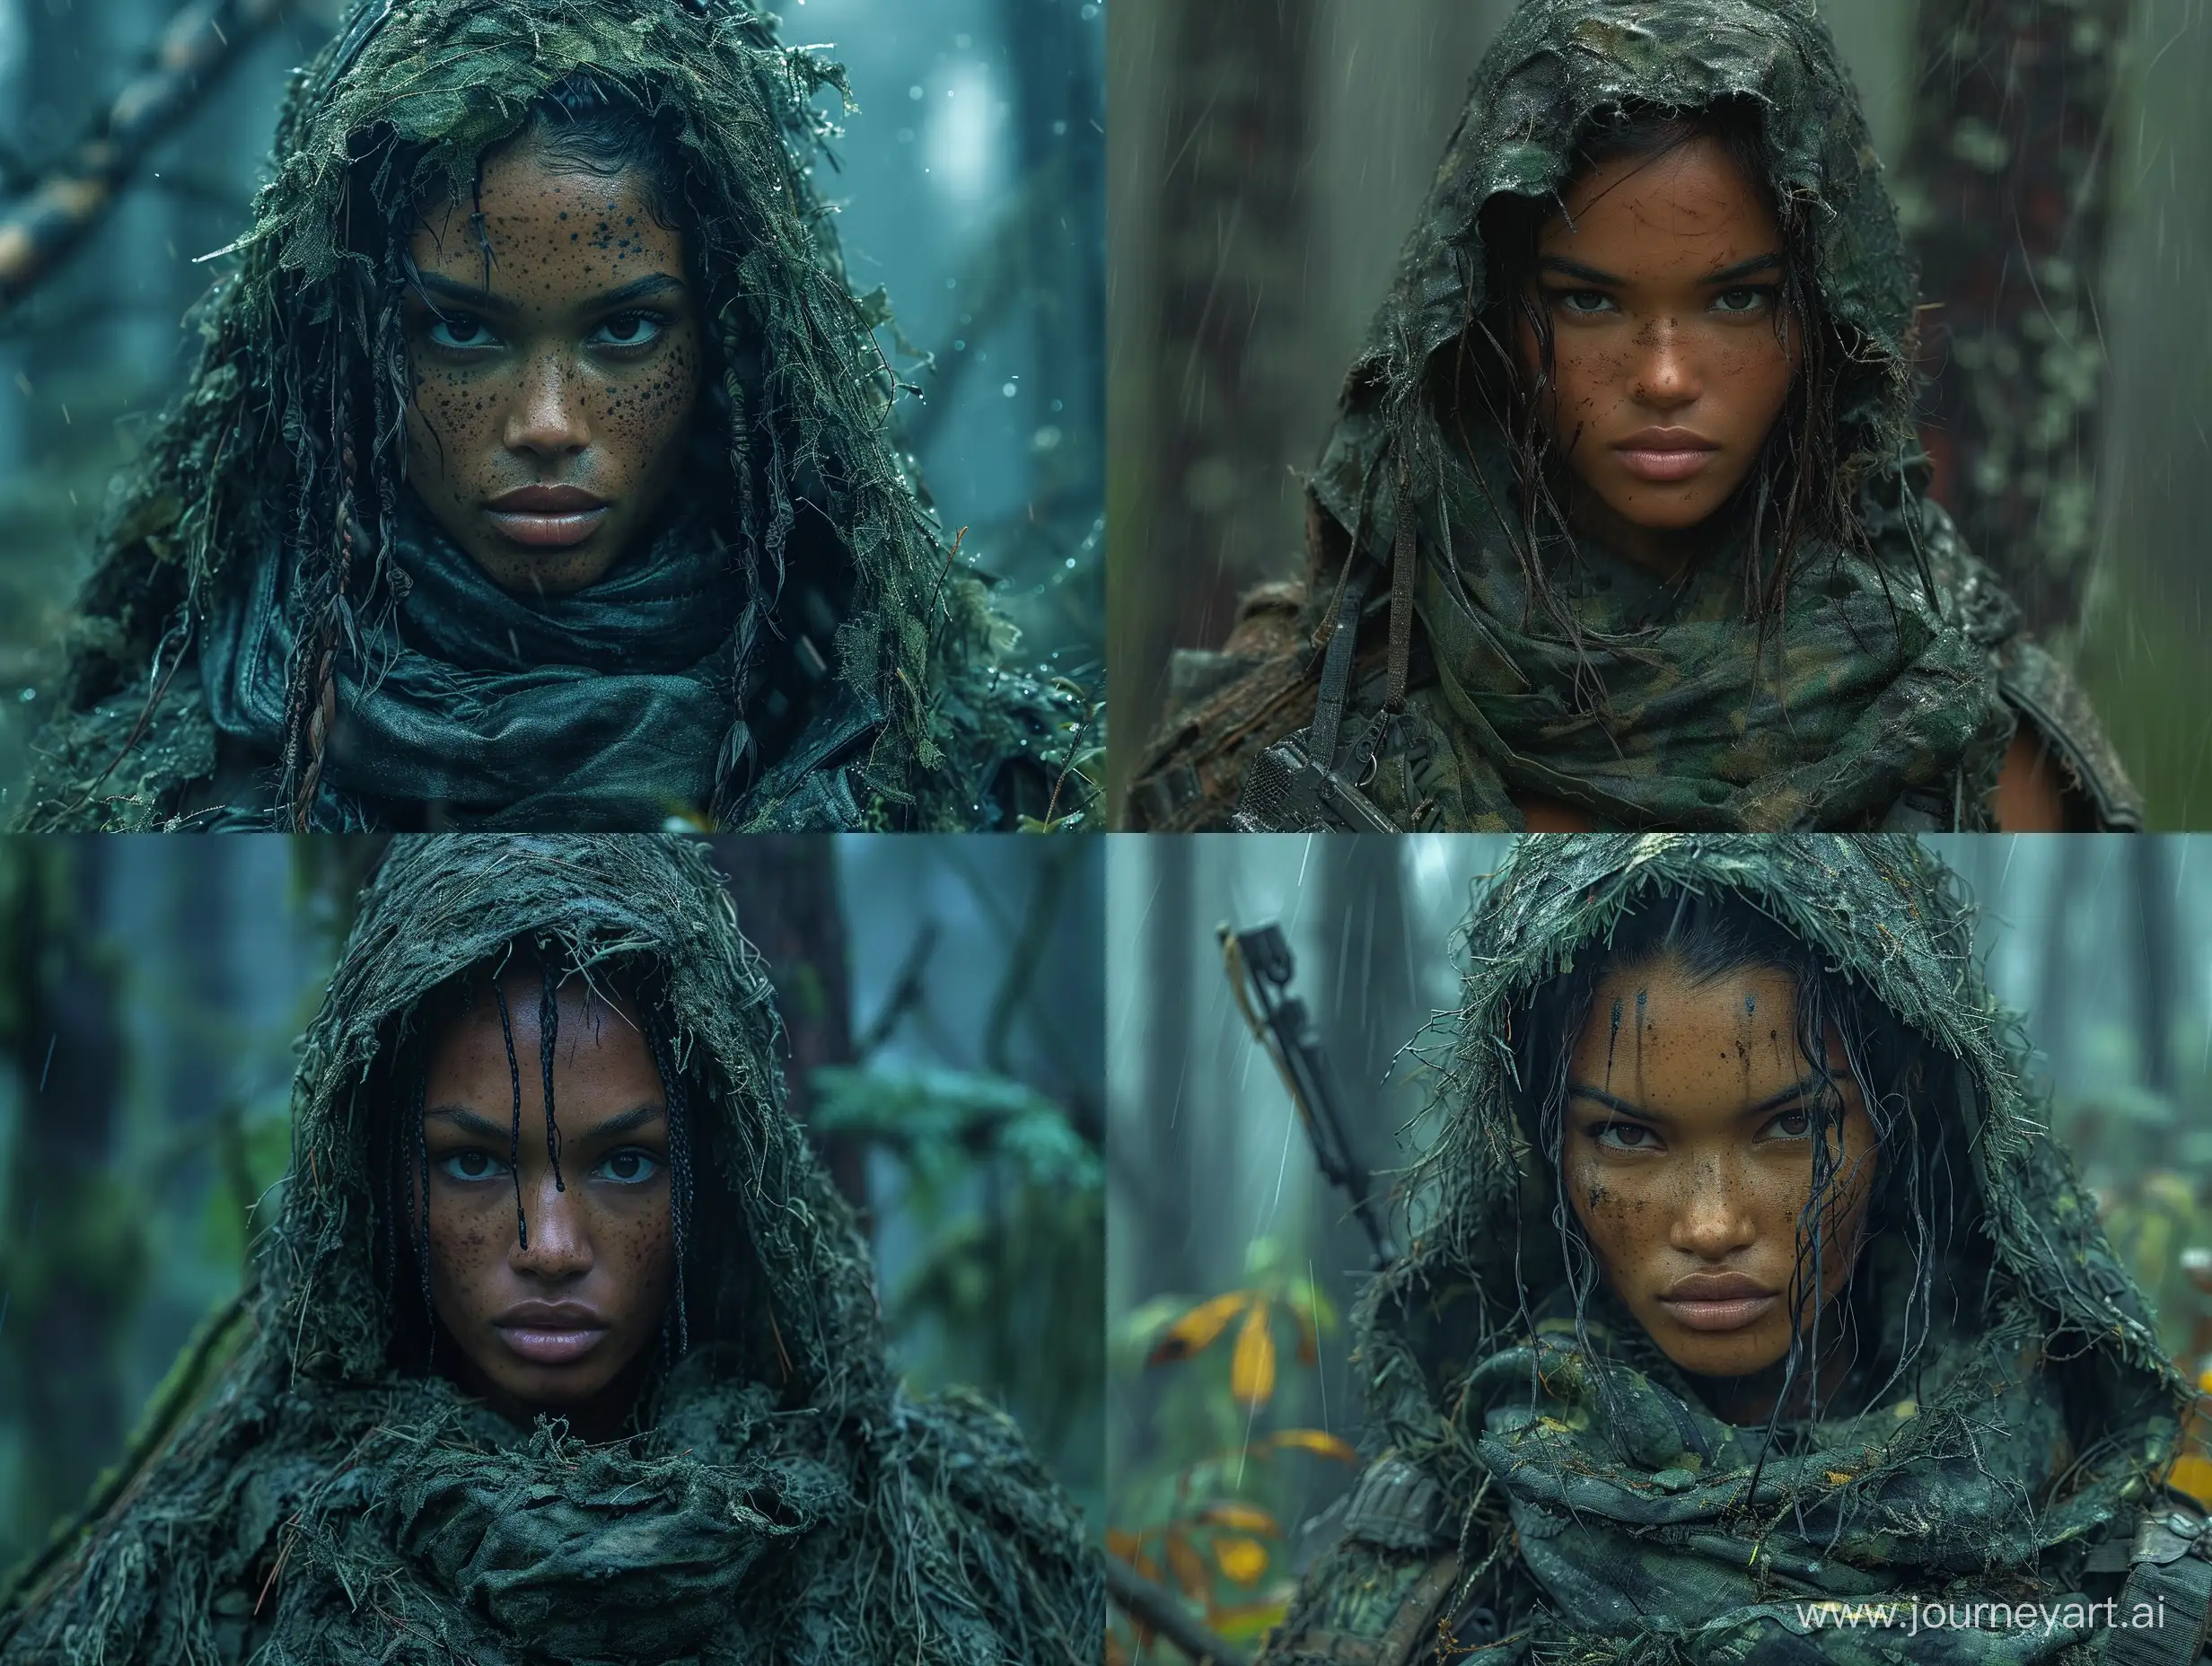 Stunning-Female-STALKER-Mercenary-in-Dark-Green-Ghillie-Suit-Amidst-Eerie-Forest